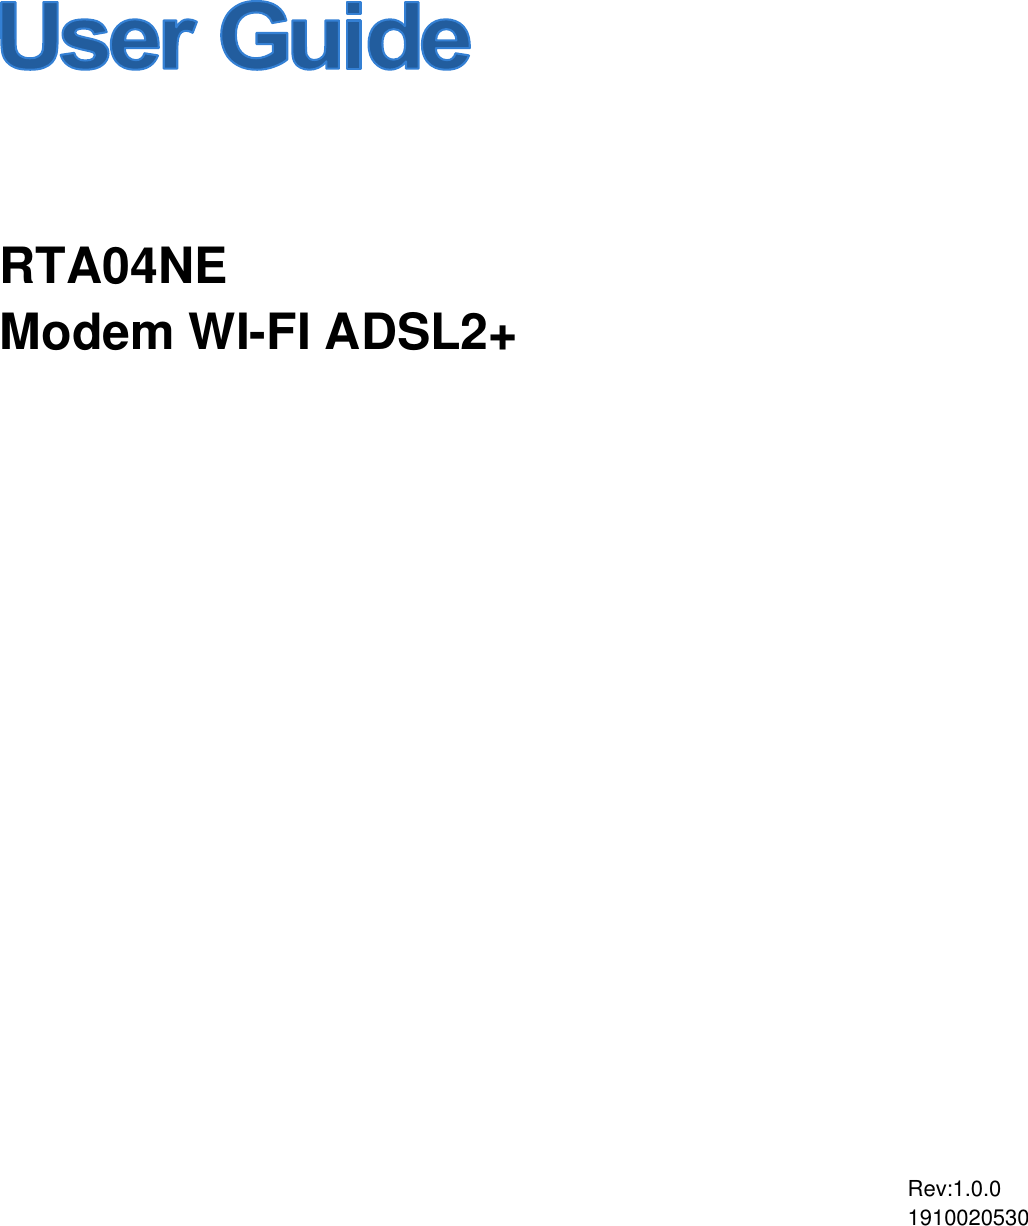    RTA04NE Modem WI-FI ADSL2+   Rev:1.0.0 1910020530 